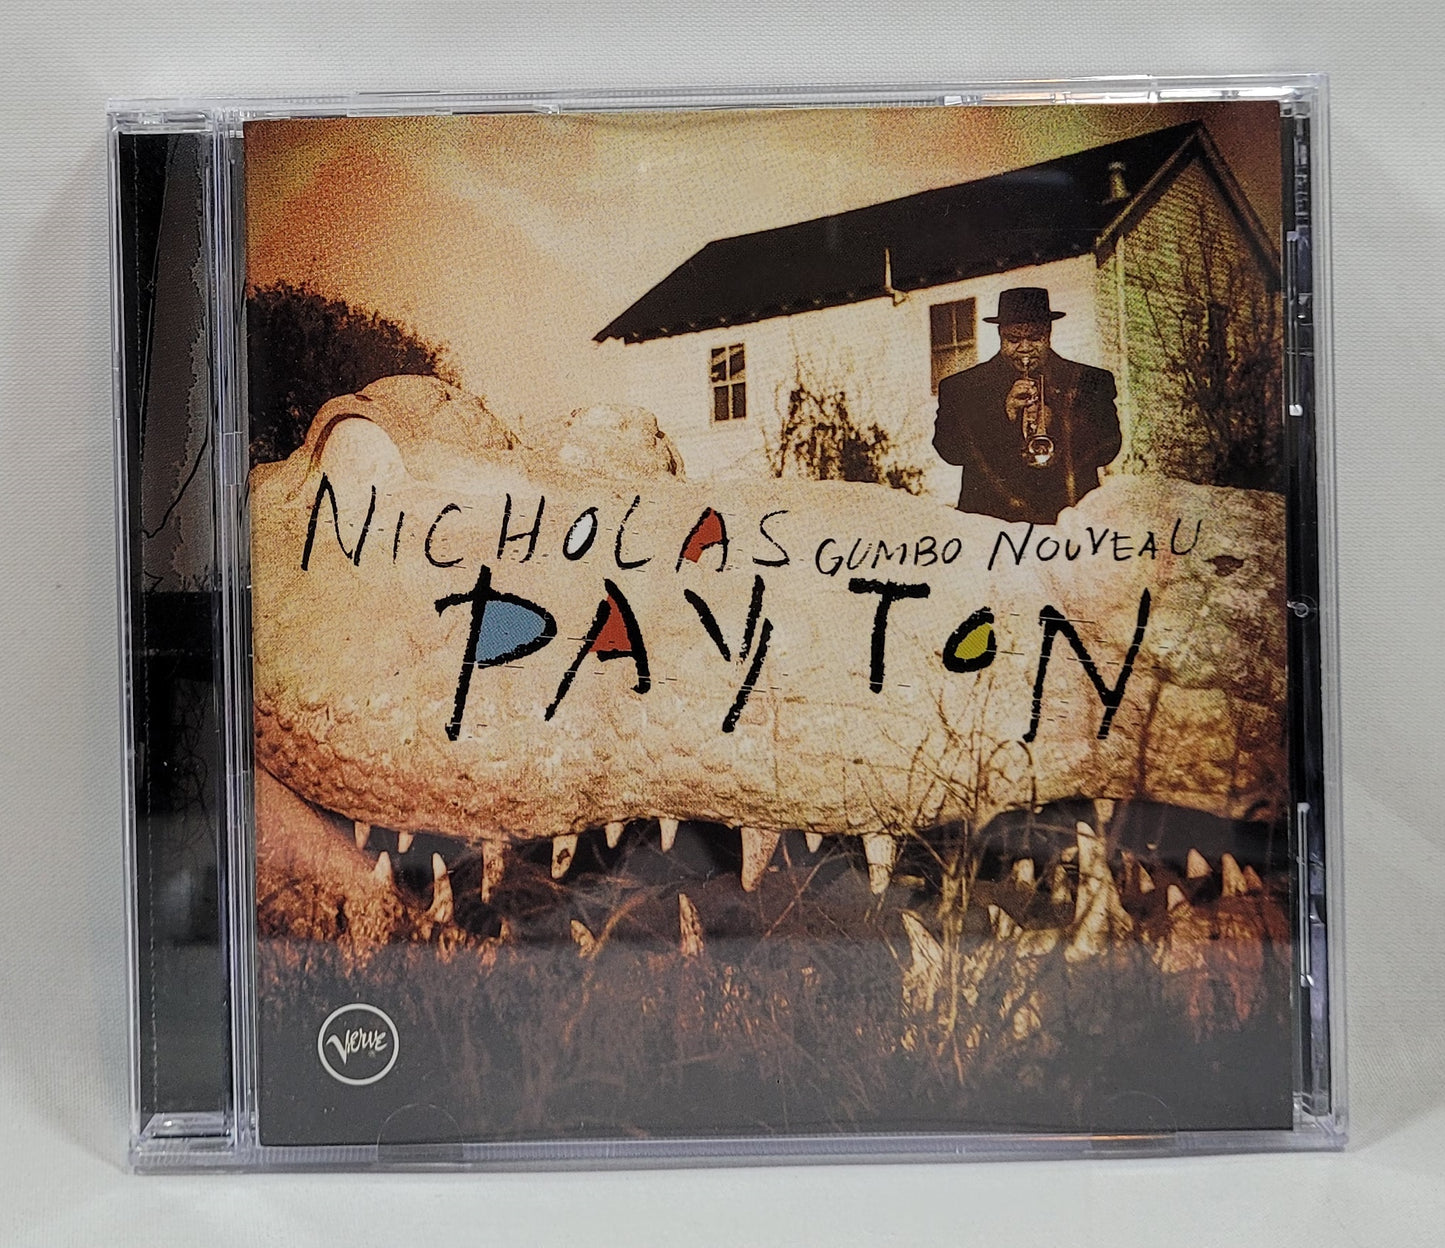 Nicholas Payton - Gumbo Nouveau [1996 Used CD]